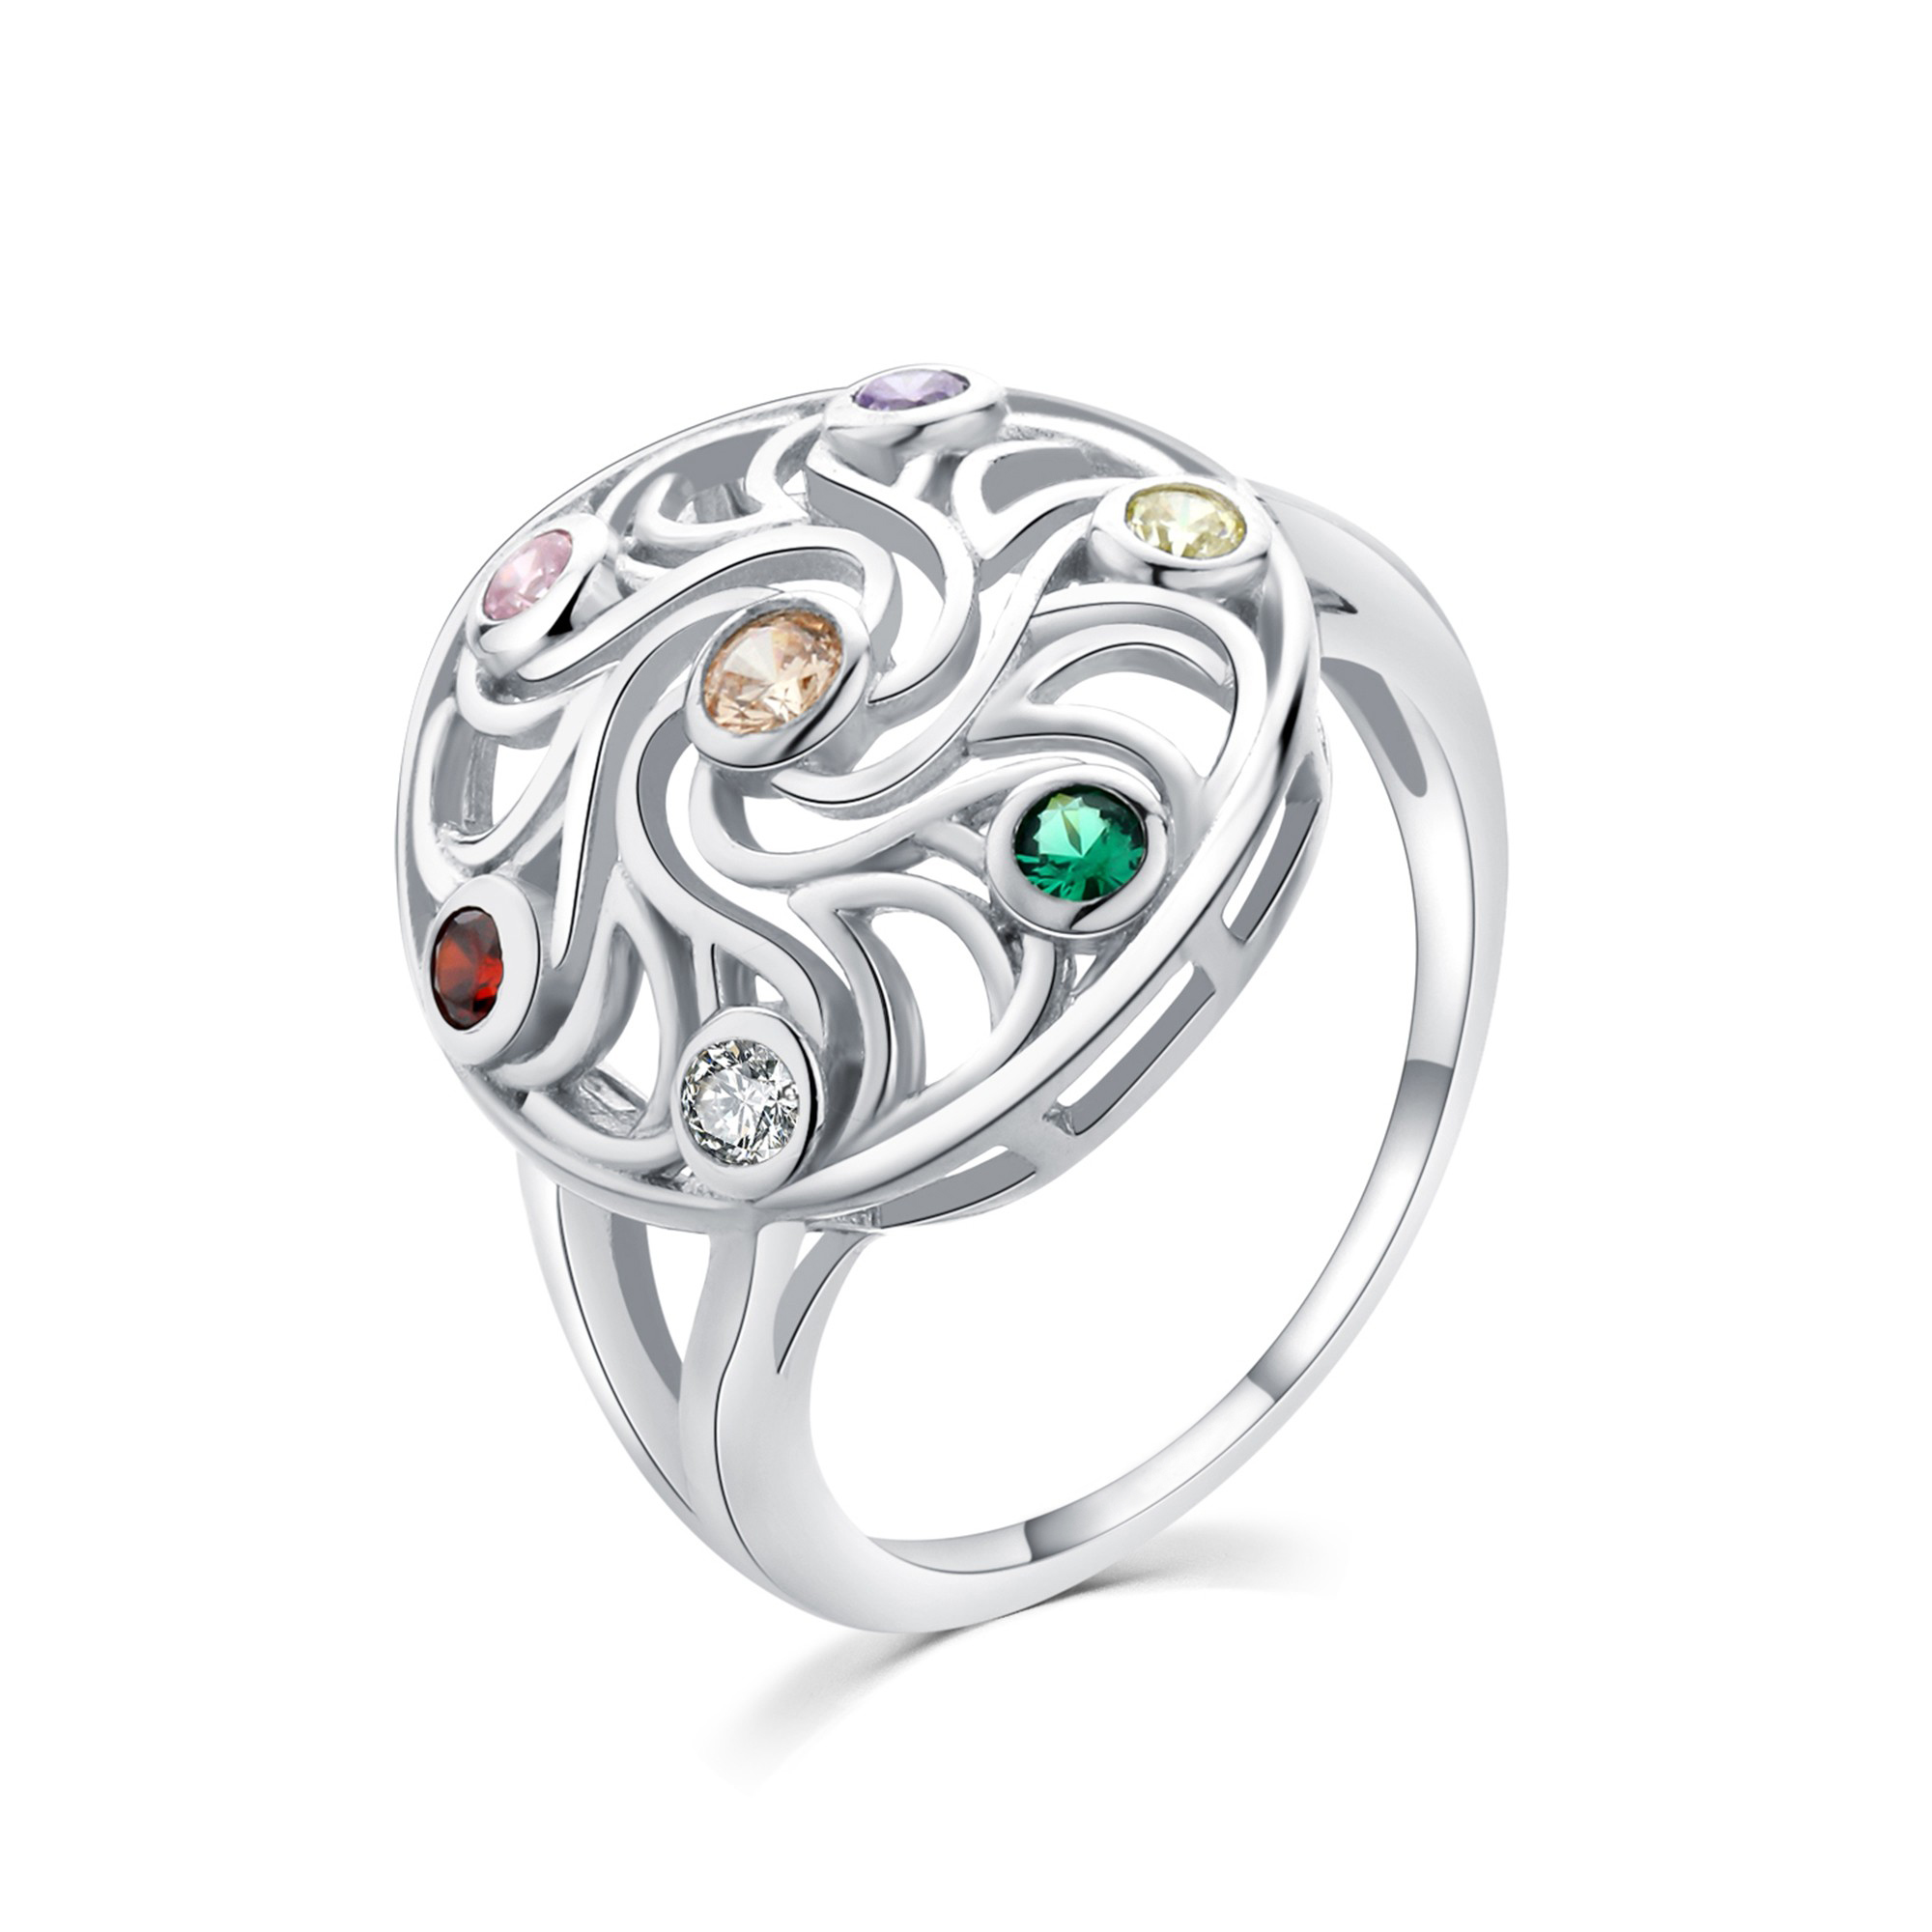 MOISS Moiss stříbrný prsten s barevnými kameny R0002143 Velikost 55 mm R0002143